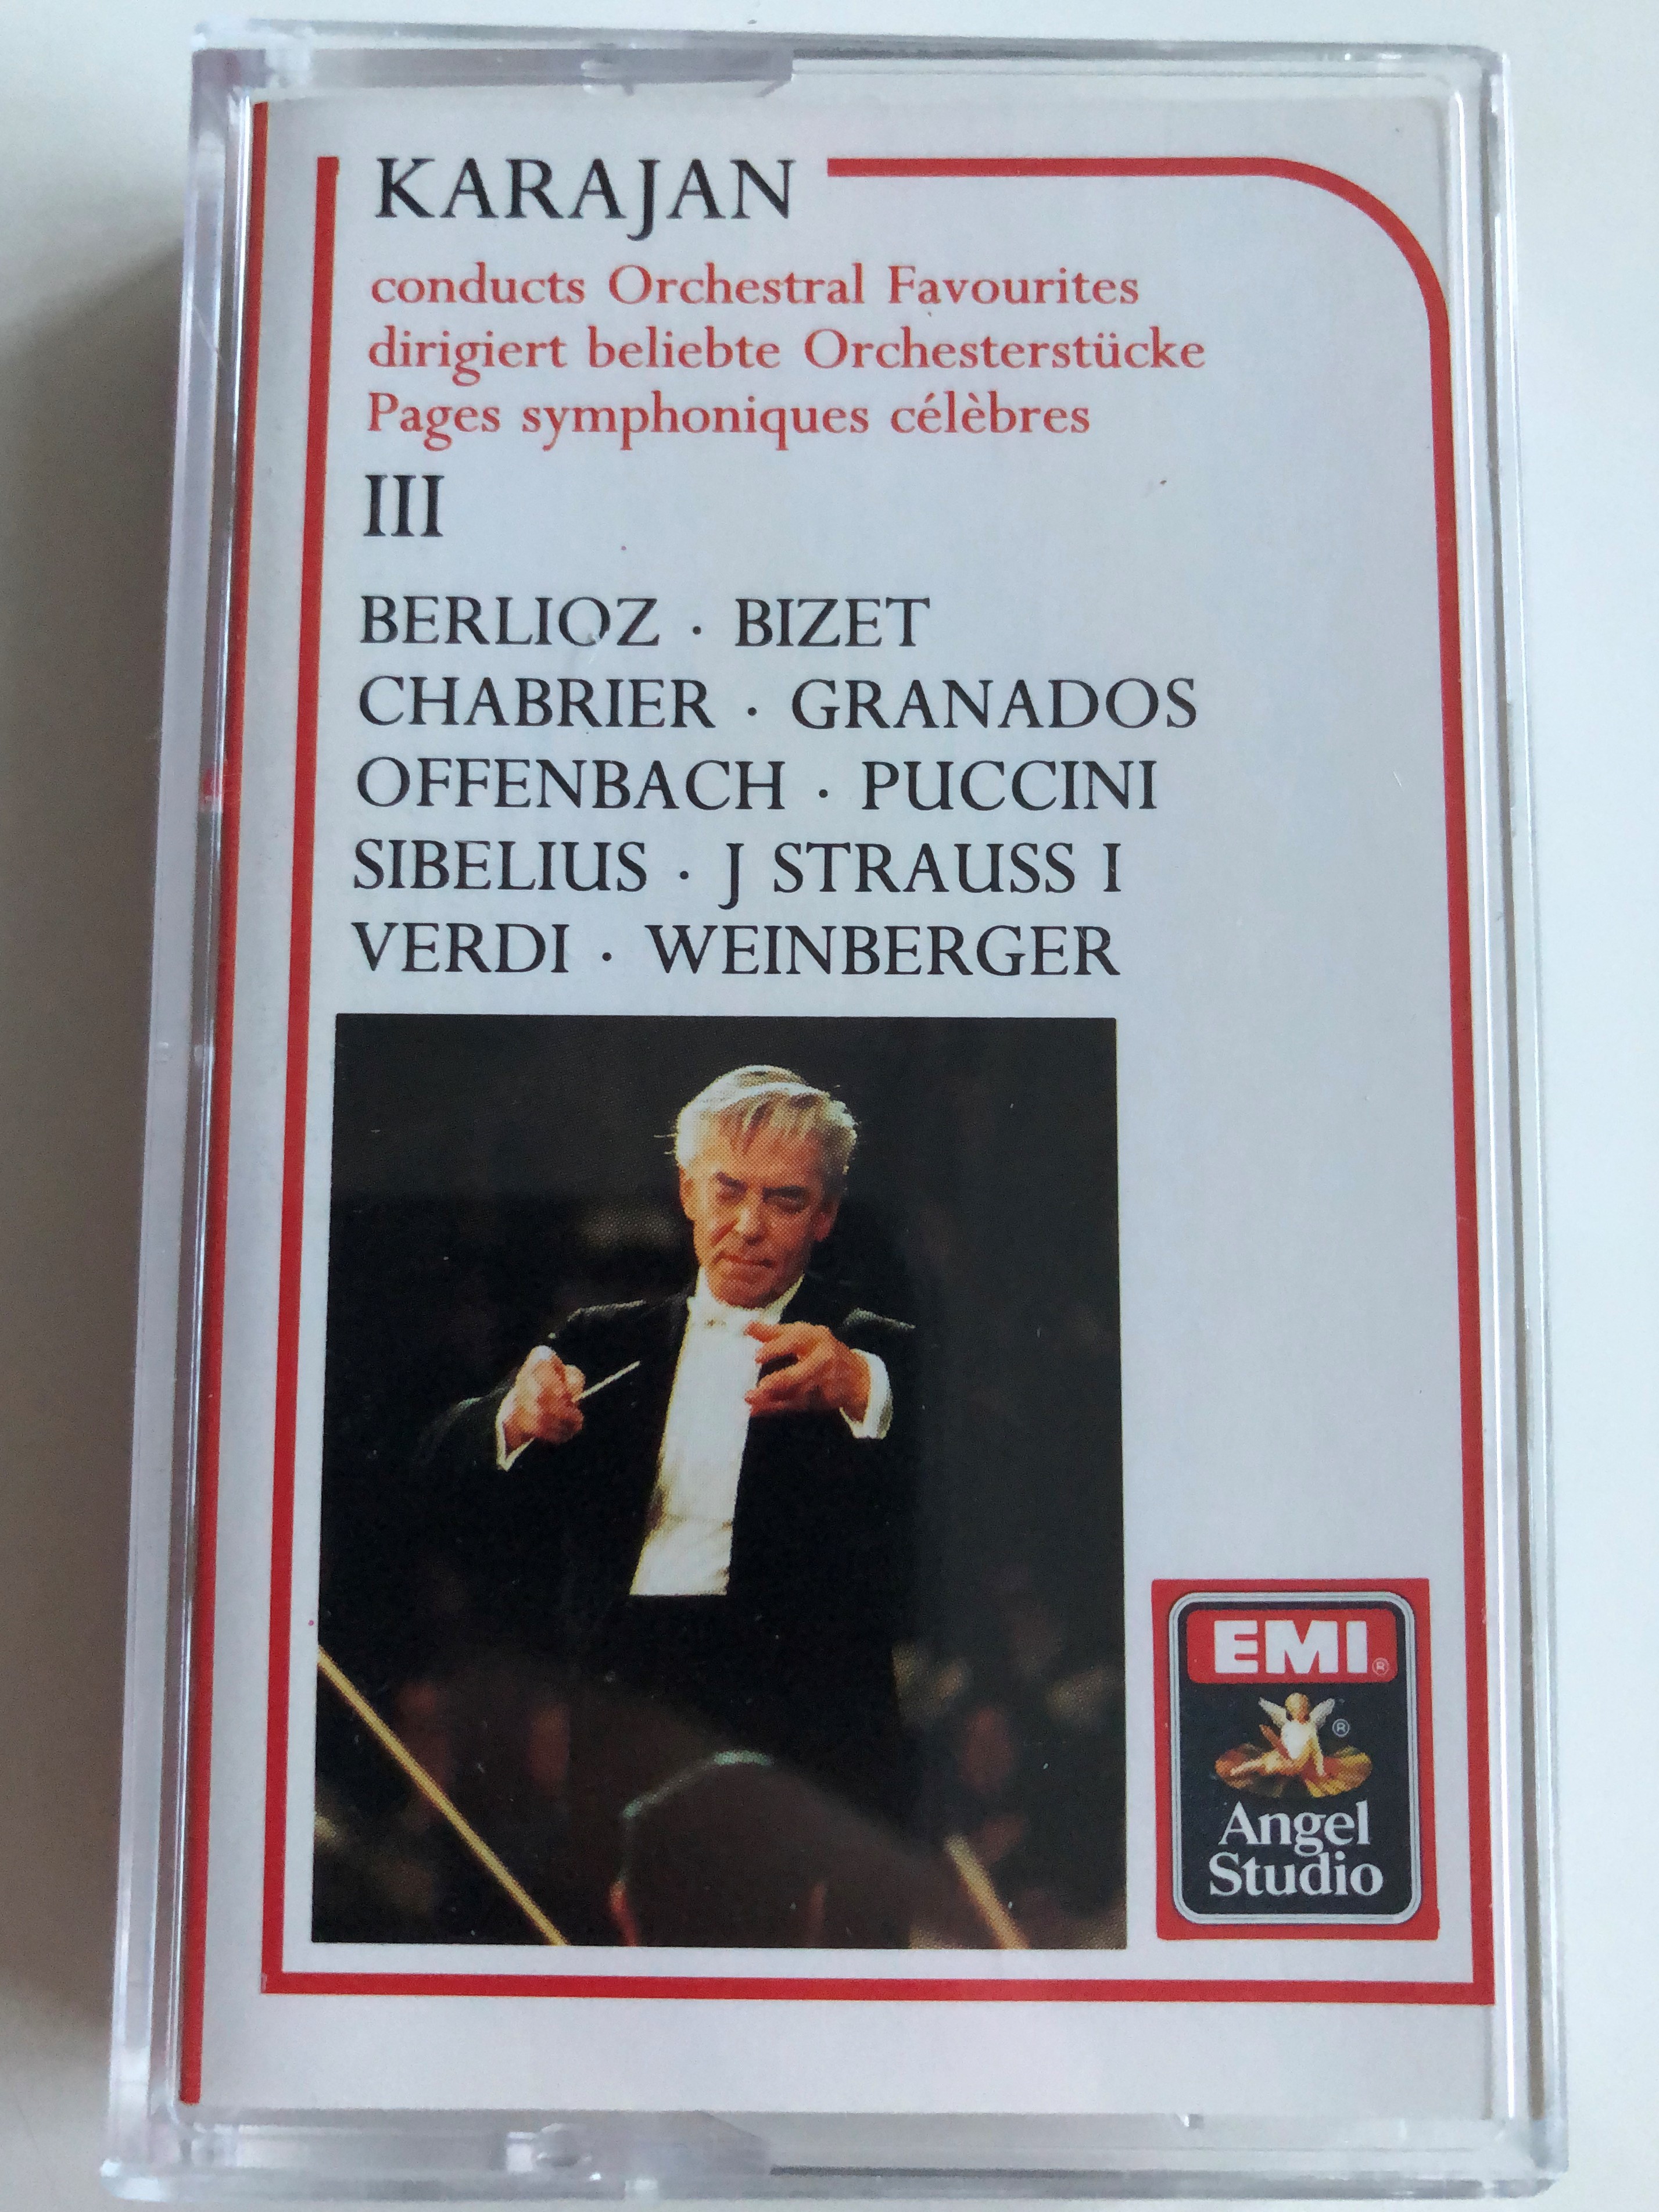 karajan-conducts-orchestral-favourites-dirigiert-beliebte-orchesterstucke-pages-symphoniques-celebres-iii-berlioz-bizet-chabrier-granados-puccini-offenbach-j.-strauss-i-verdi-weinberger-1-.jpg